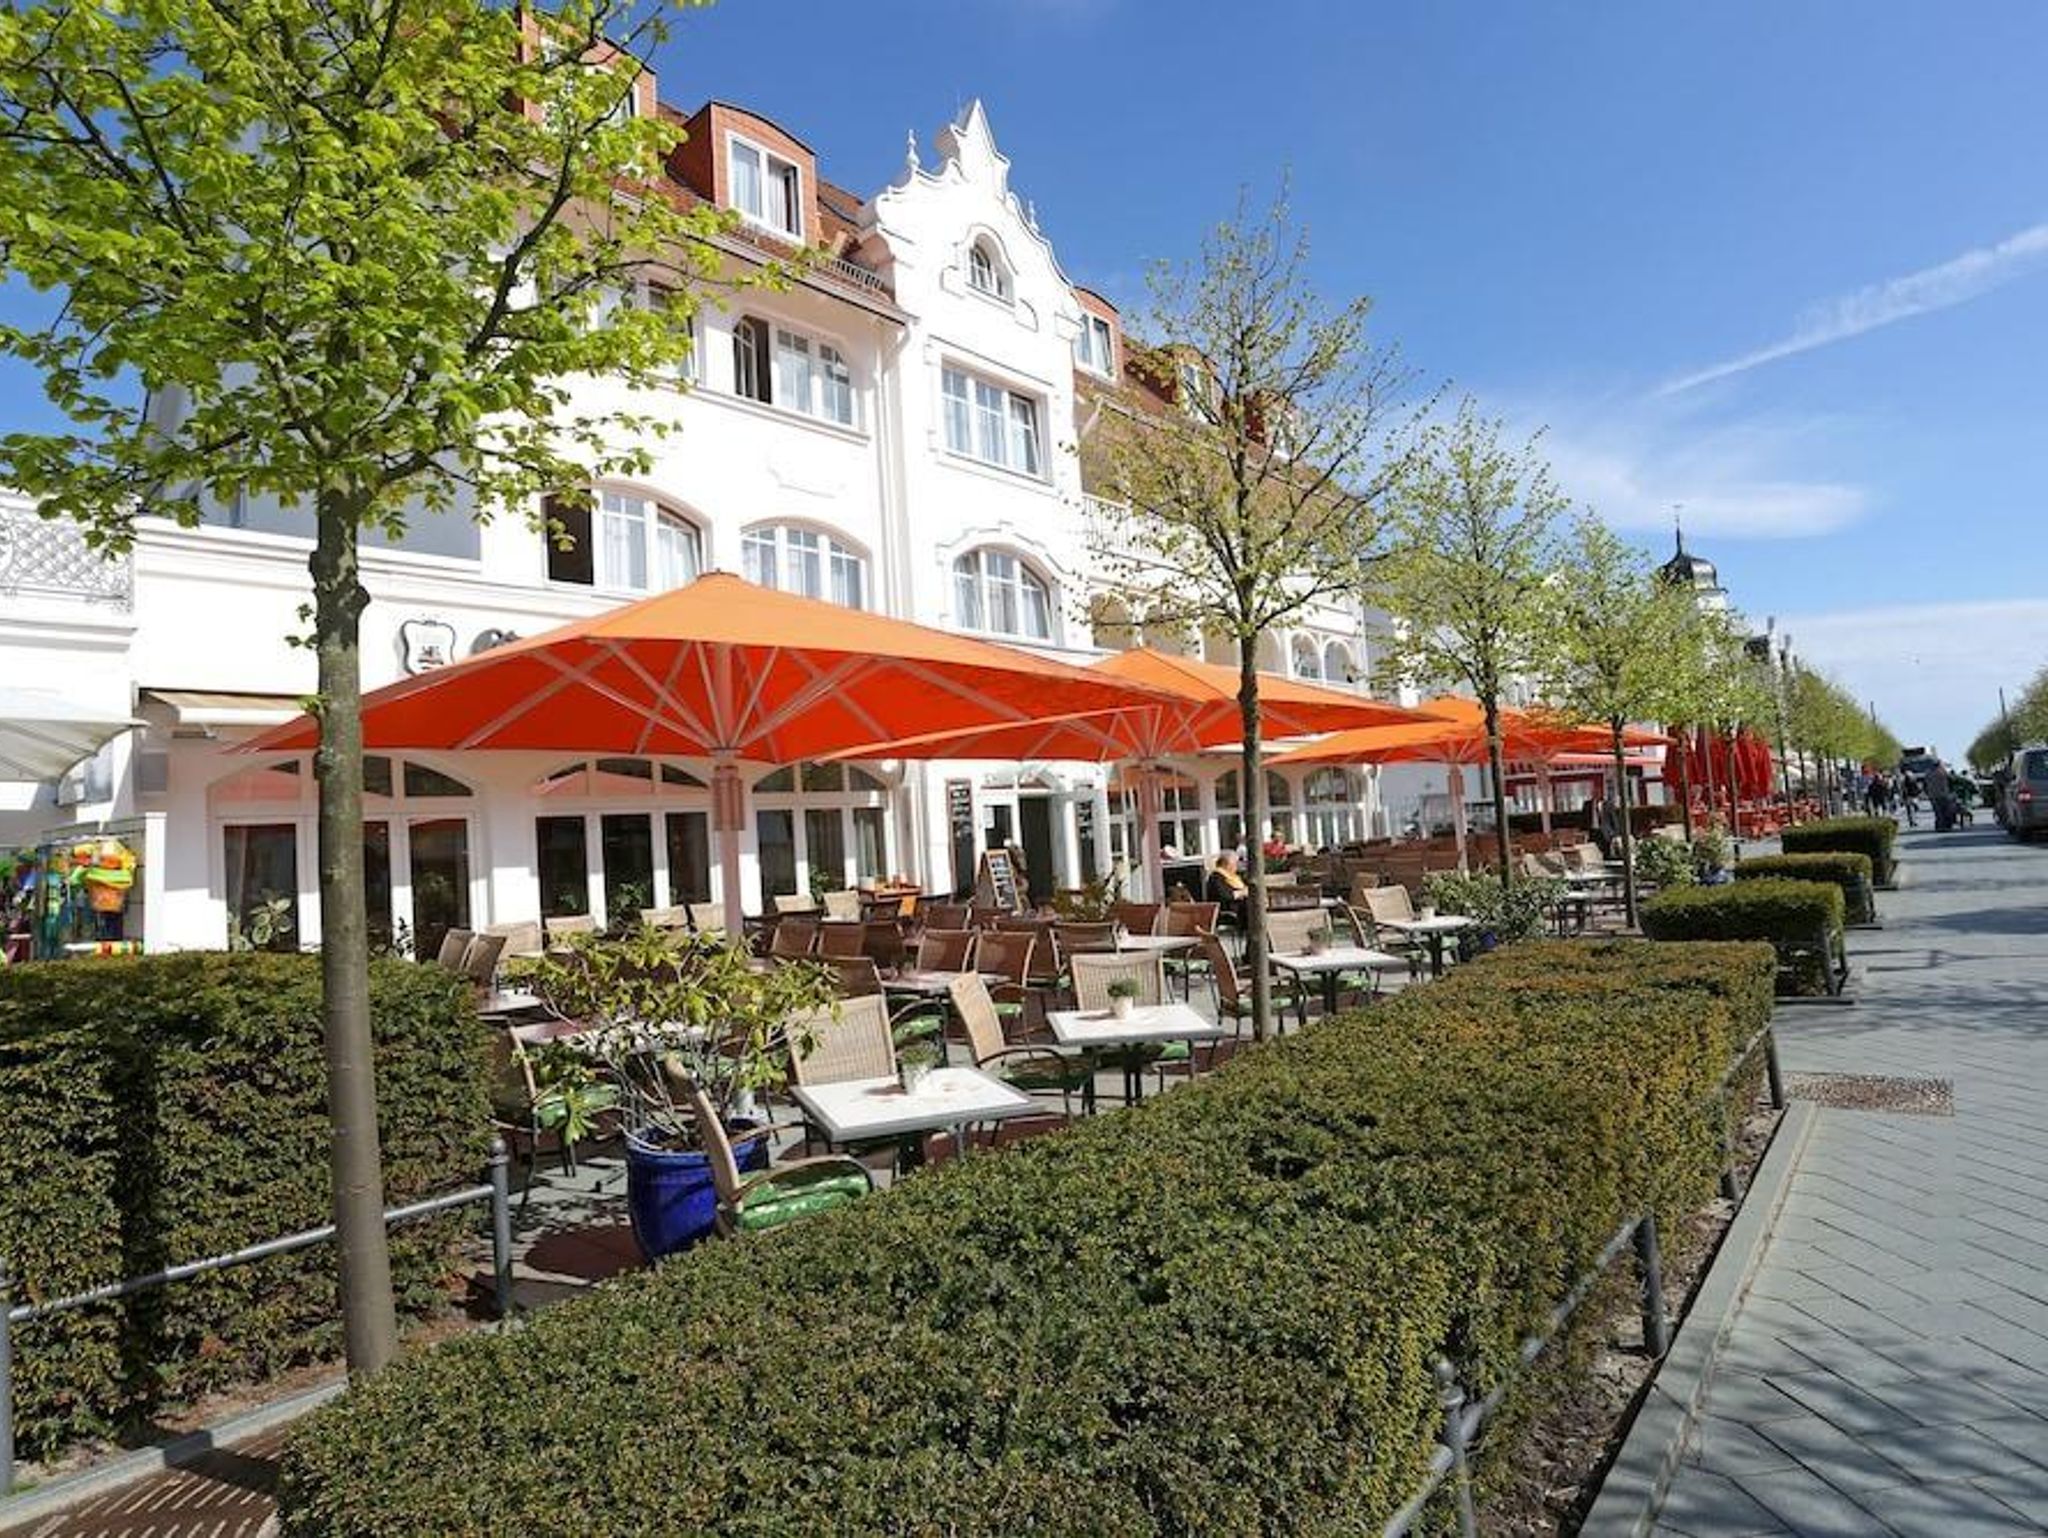 Hotel Astor Kiel by Campanile